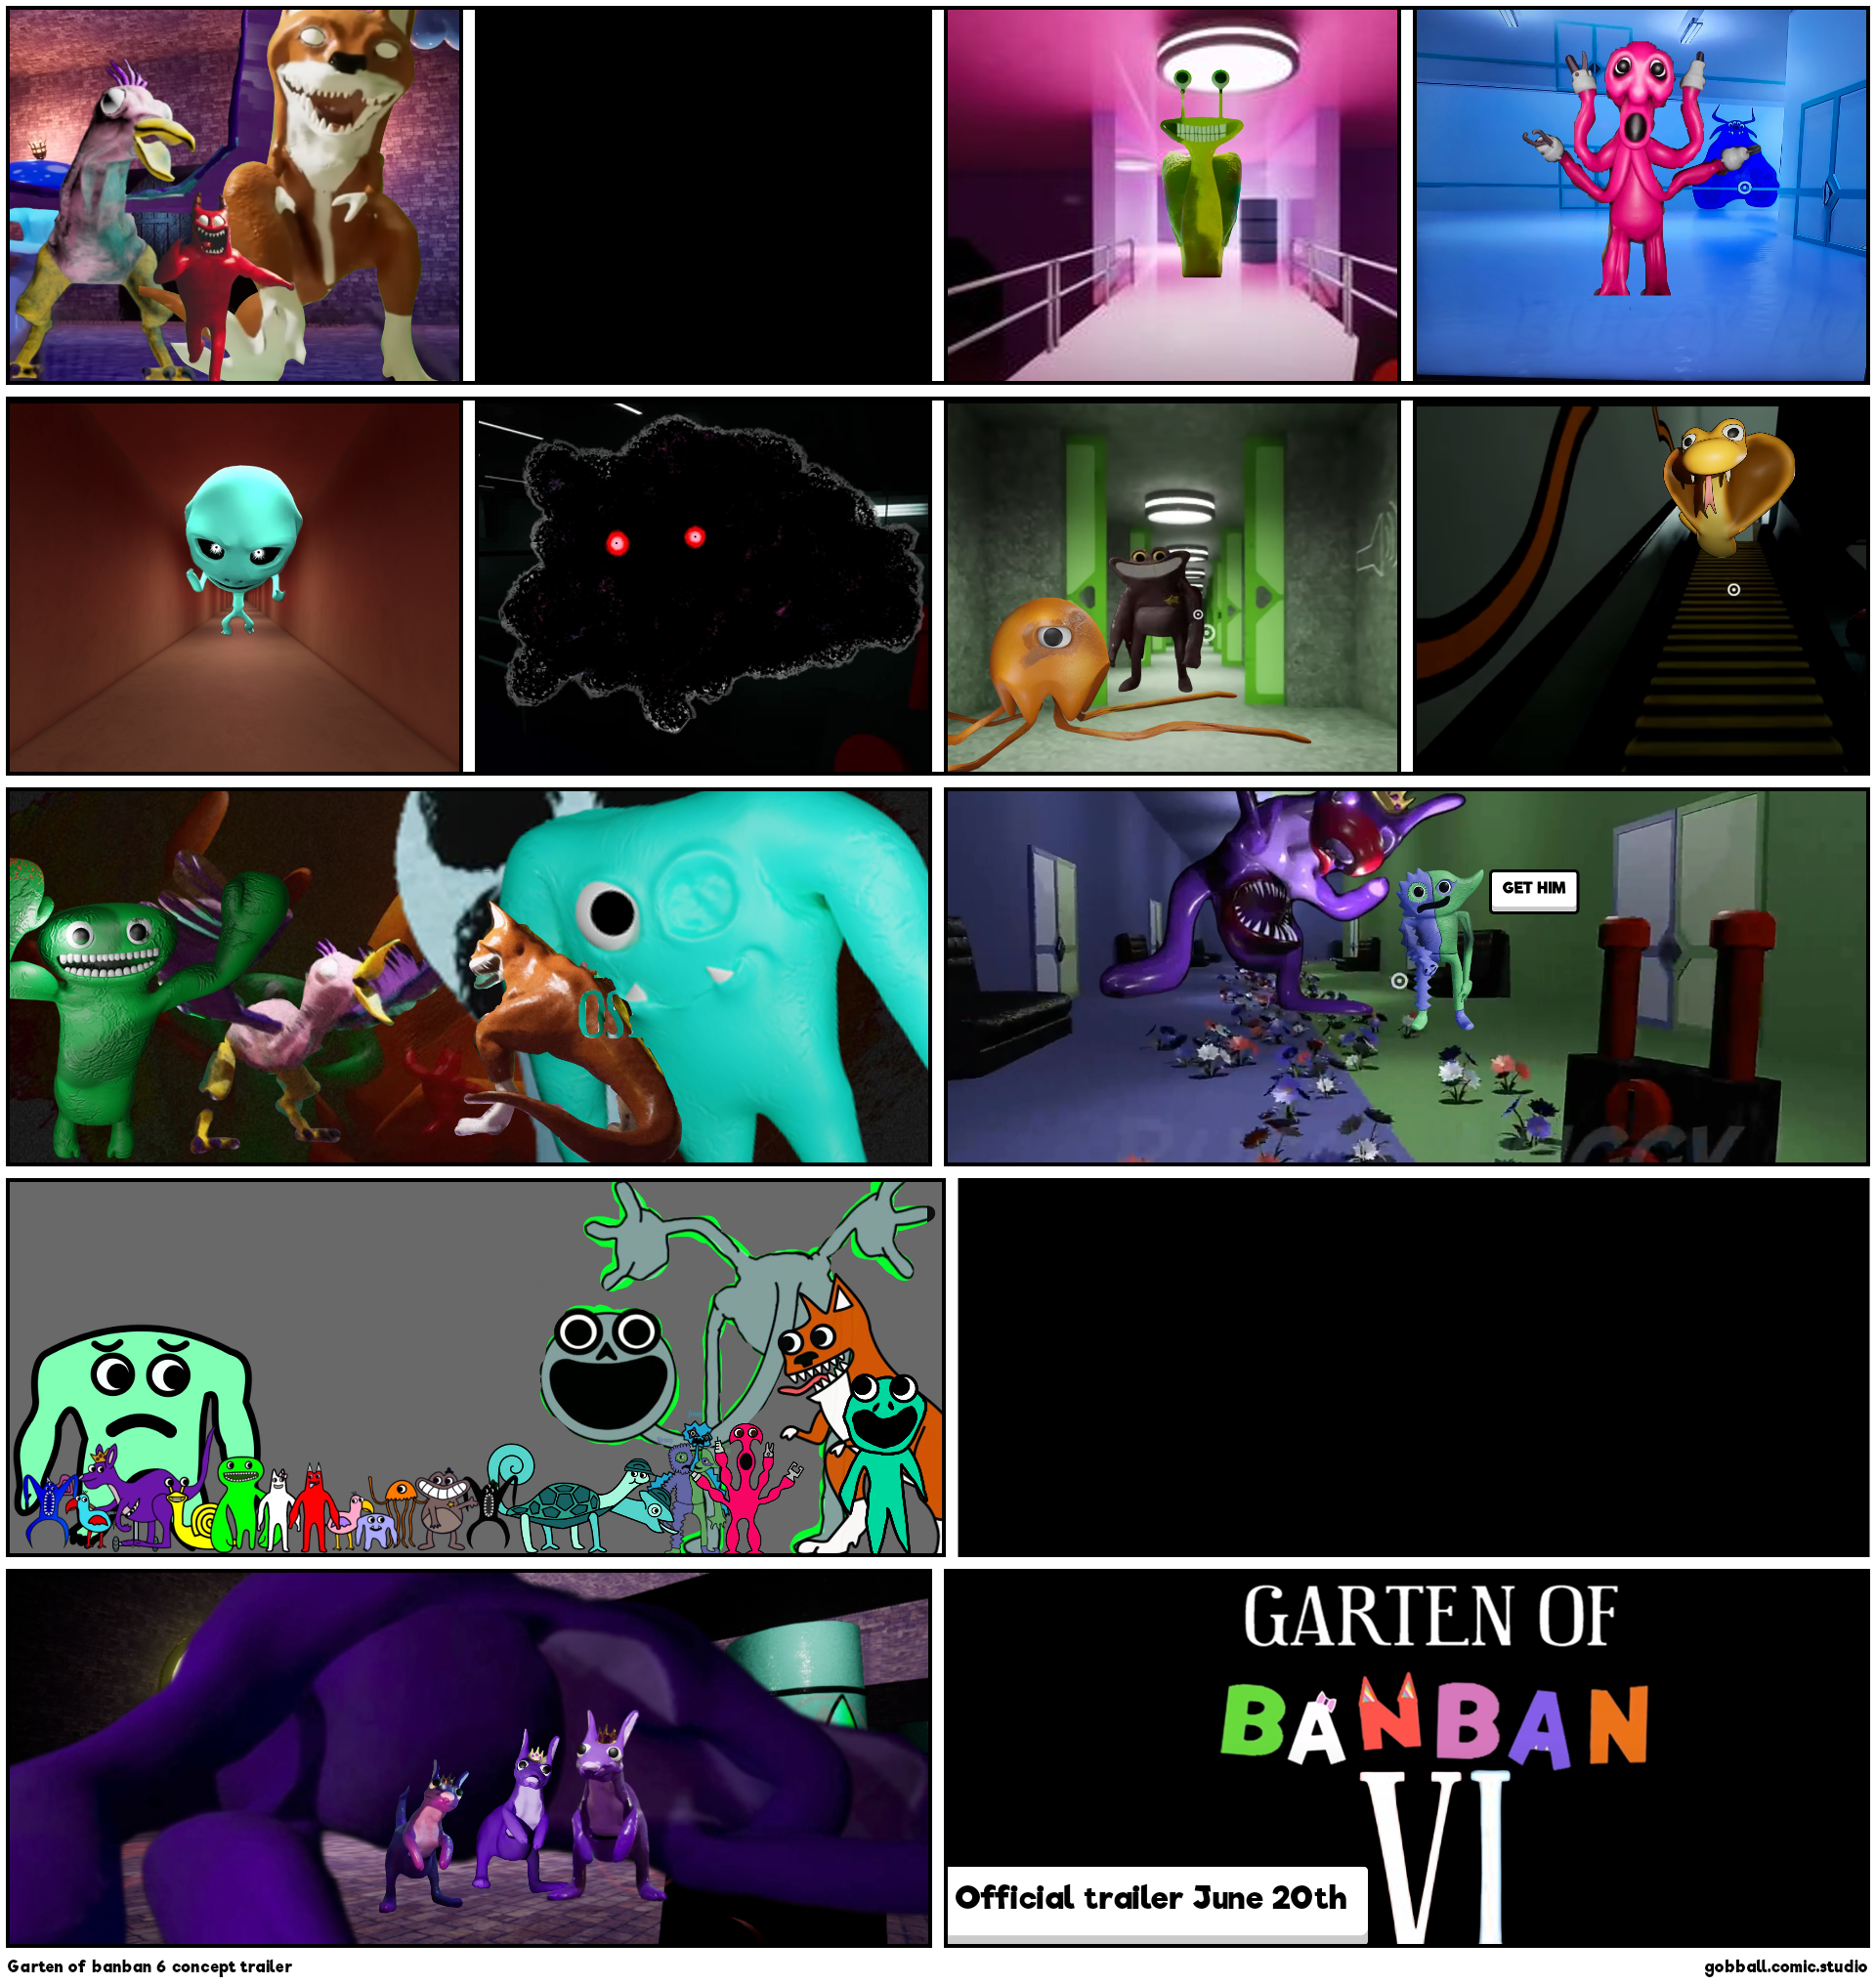 Garten of banban 6 concept trailer - Comic Studio